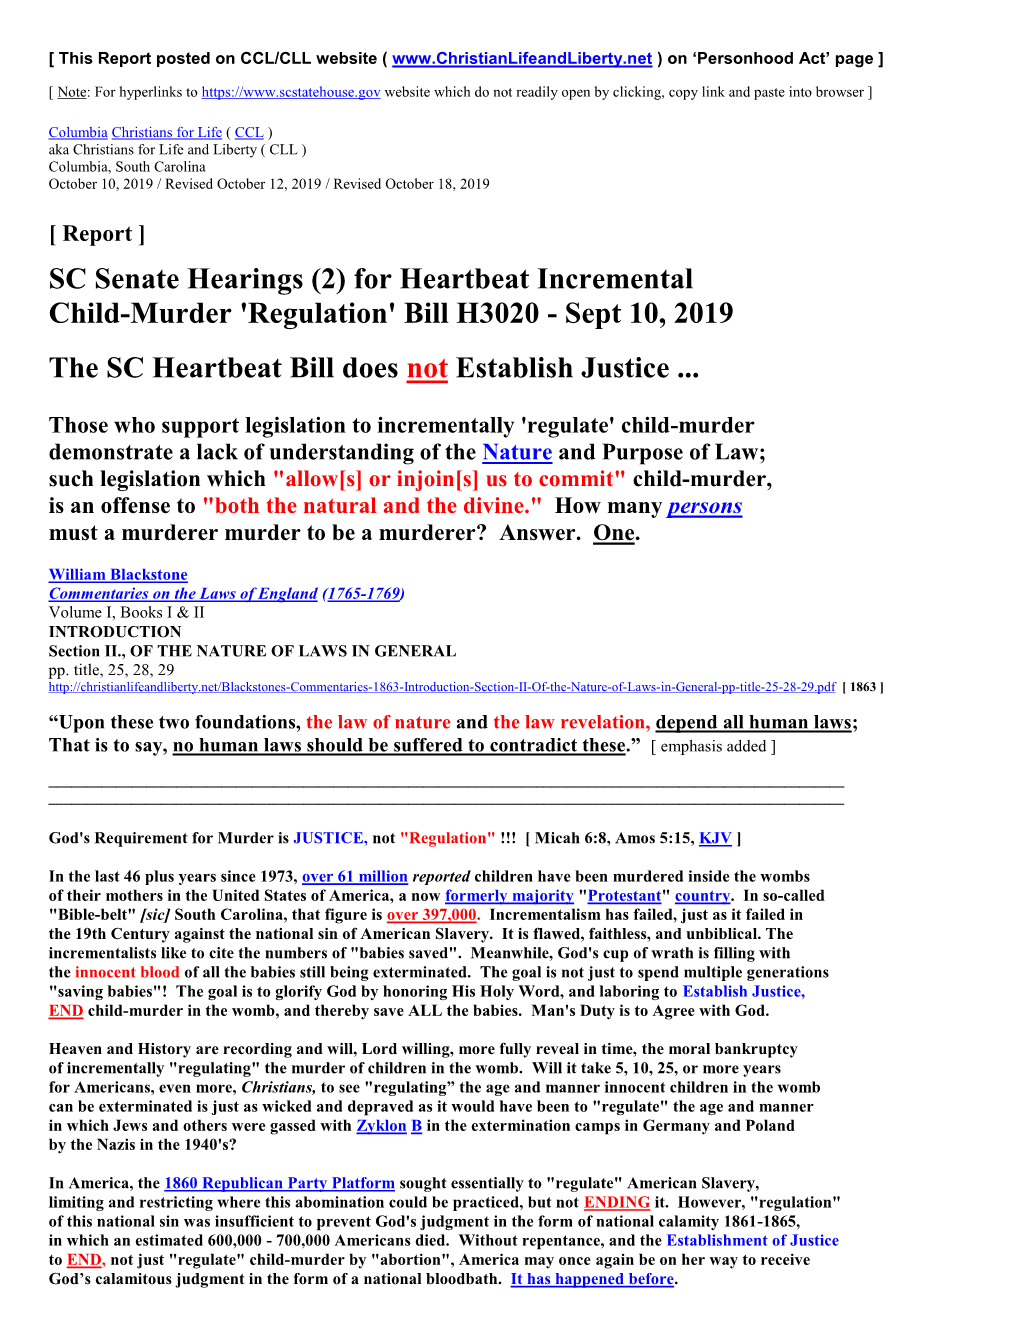 SC Senate Hearings (2) for Heartbeat Incremental Child-Murder 'Regulation' Bill H3020 - Sept 10, 2019